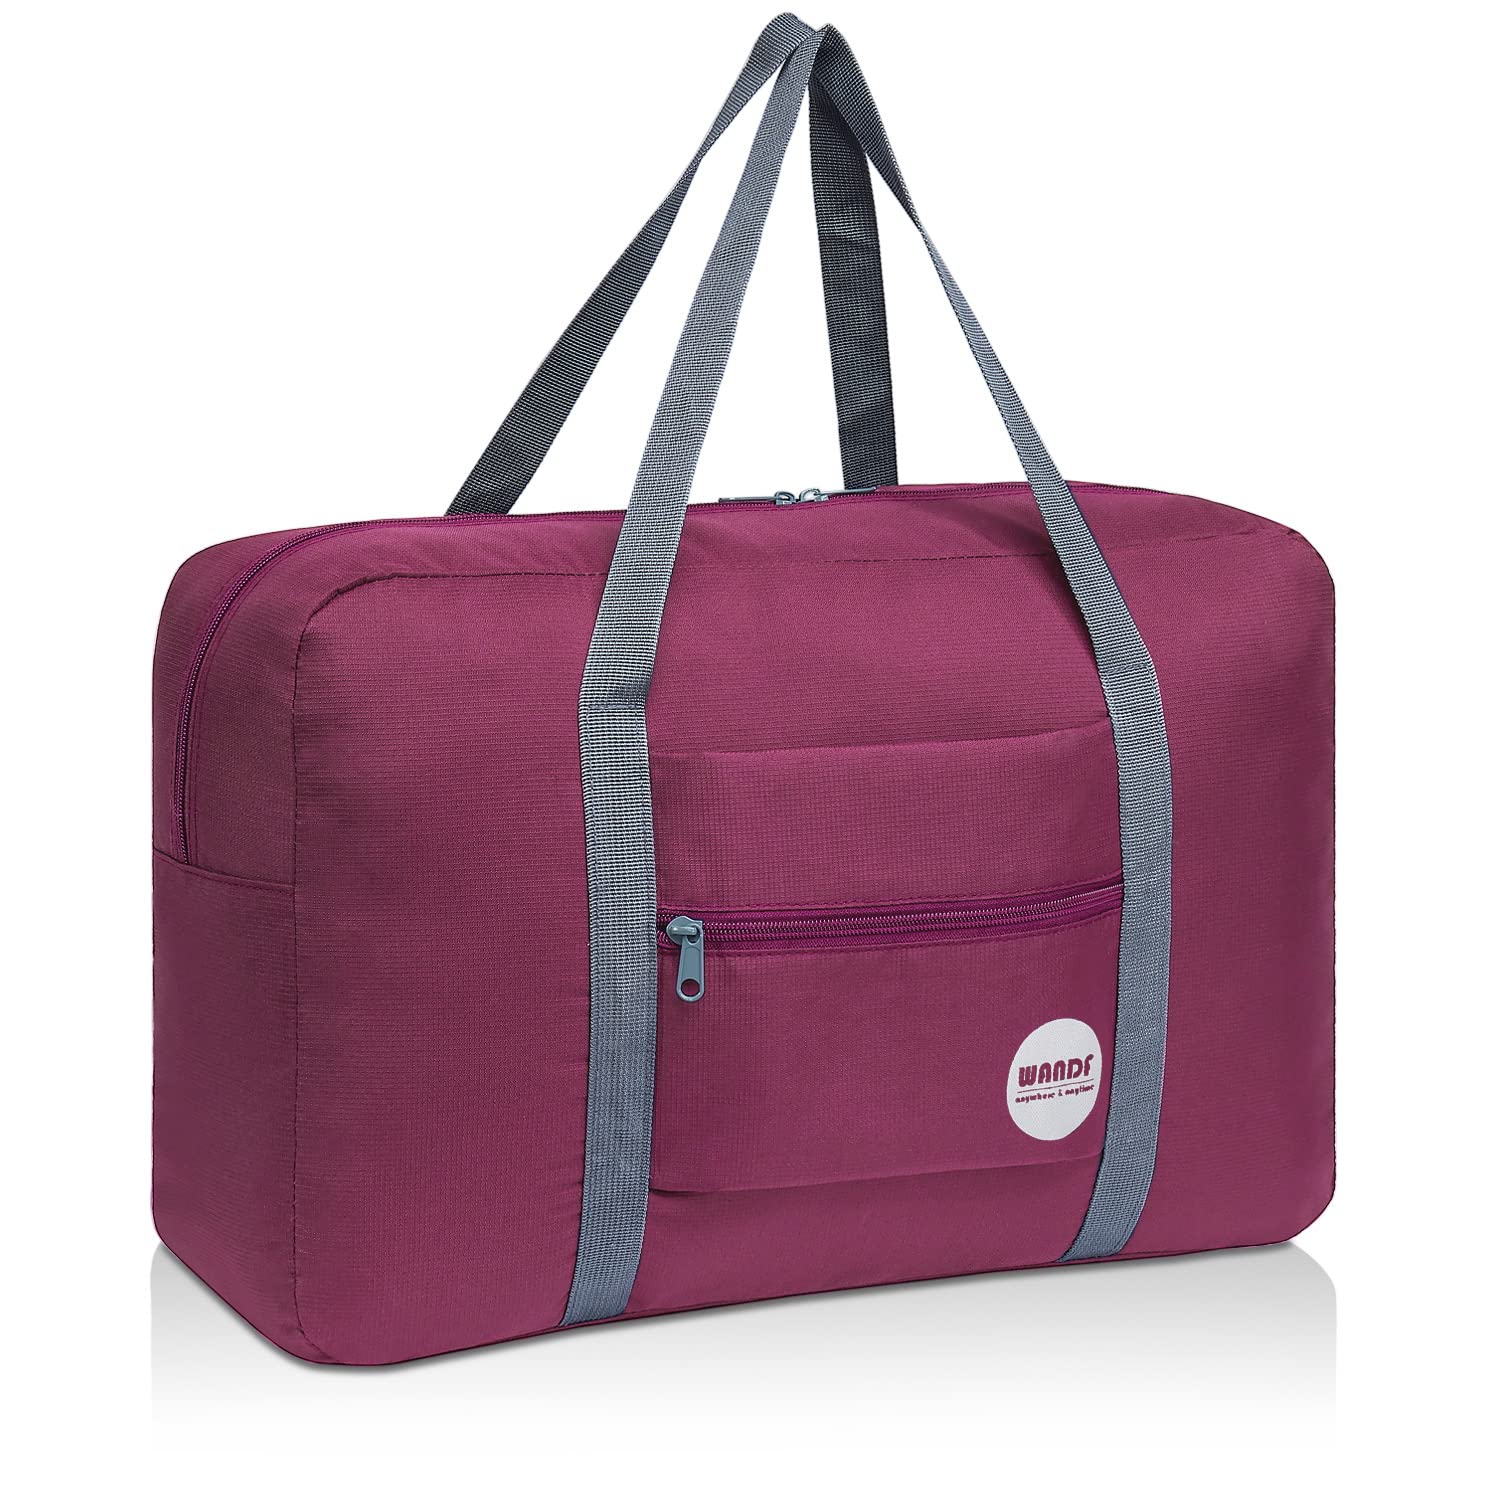 WANDF Foldable Travel Duffel Bag Luggage Sports Gym Water Resistant Nylon (Dark